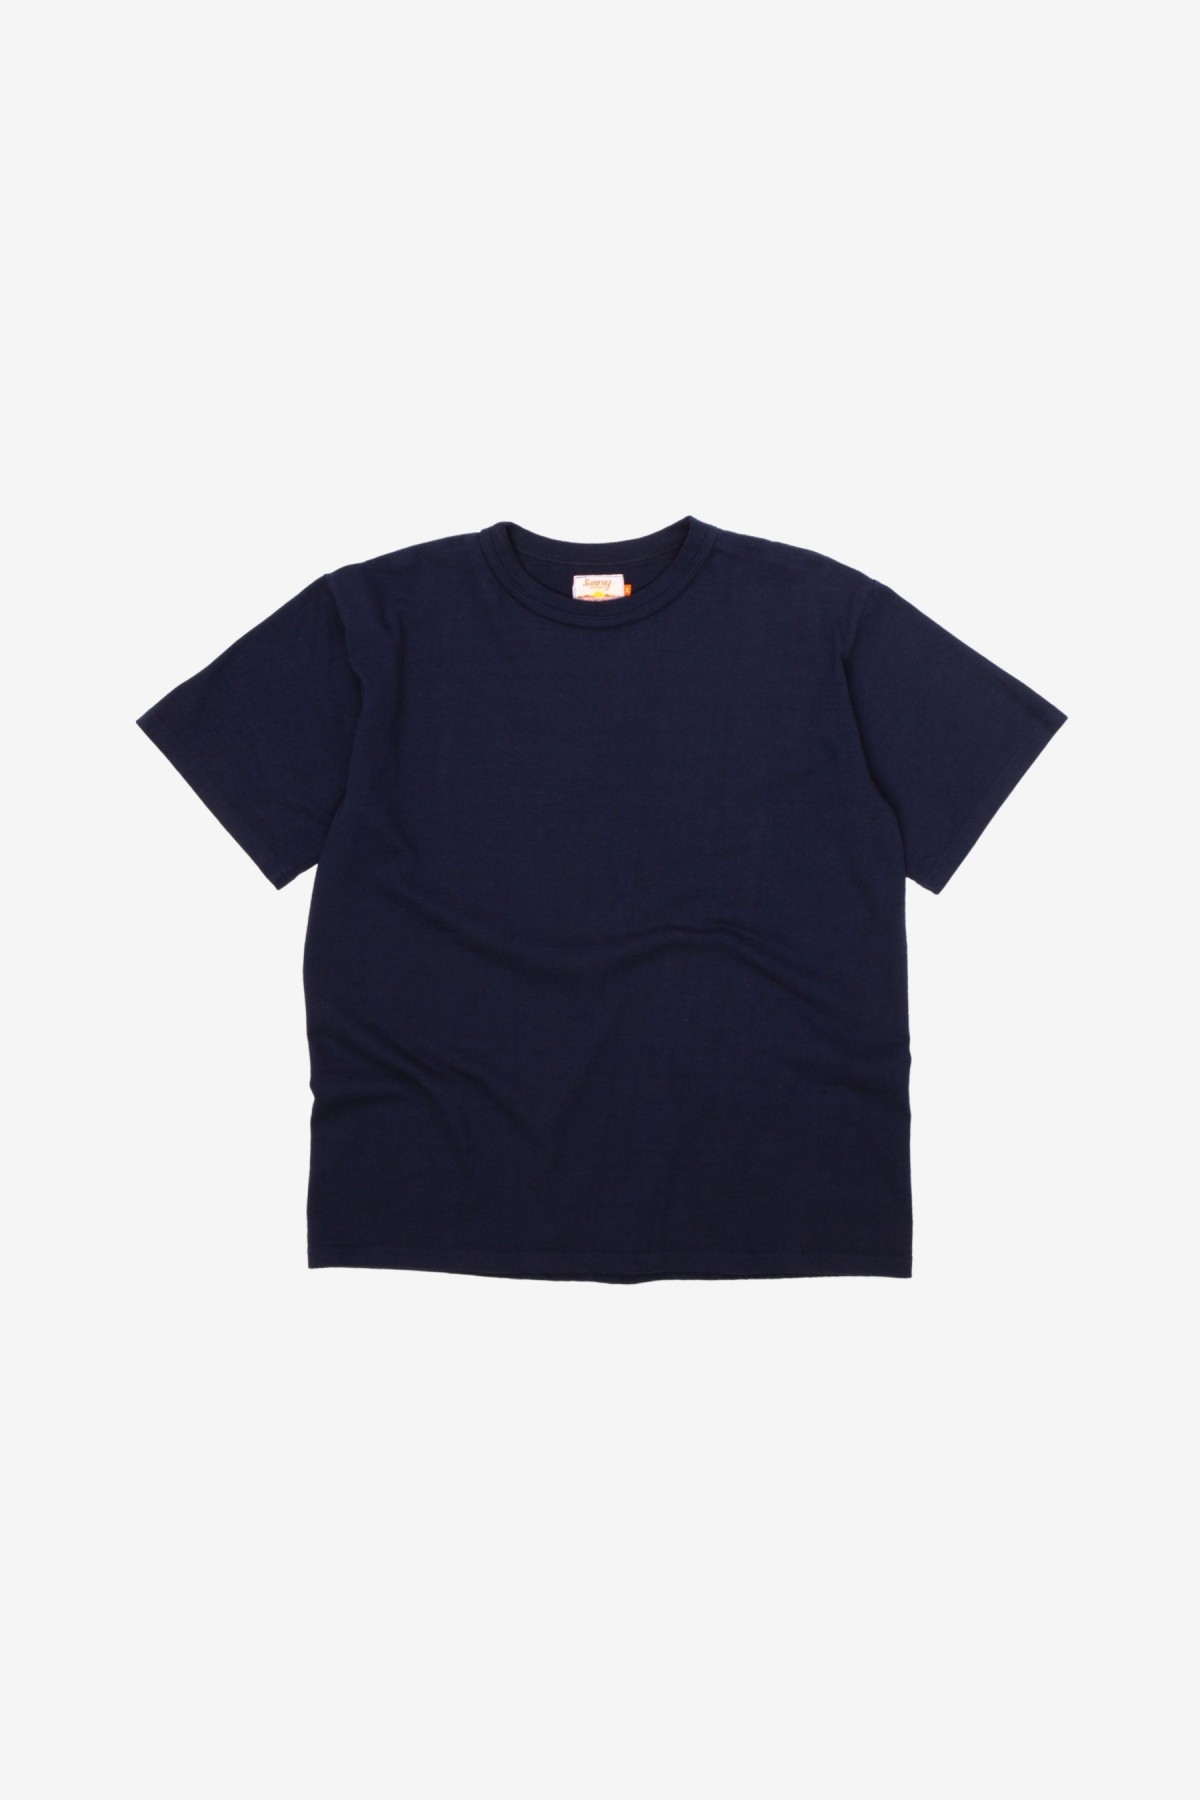 Sunray Sportswear Makaha Short Sleeve T-Shirt in Dark Navy